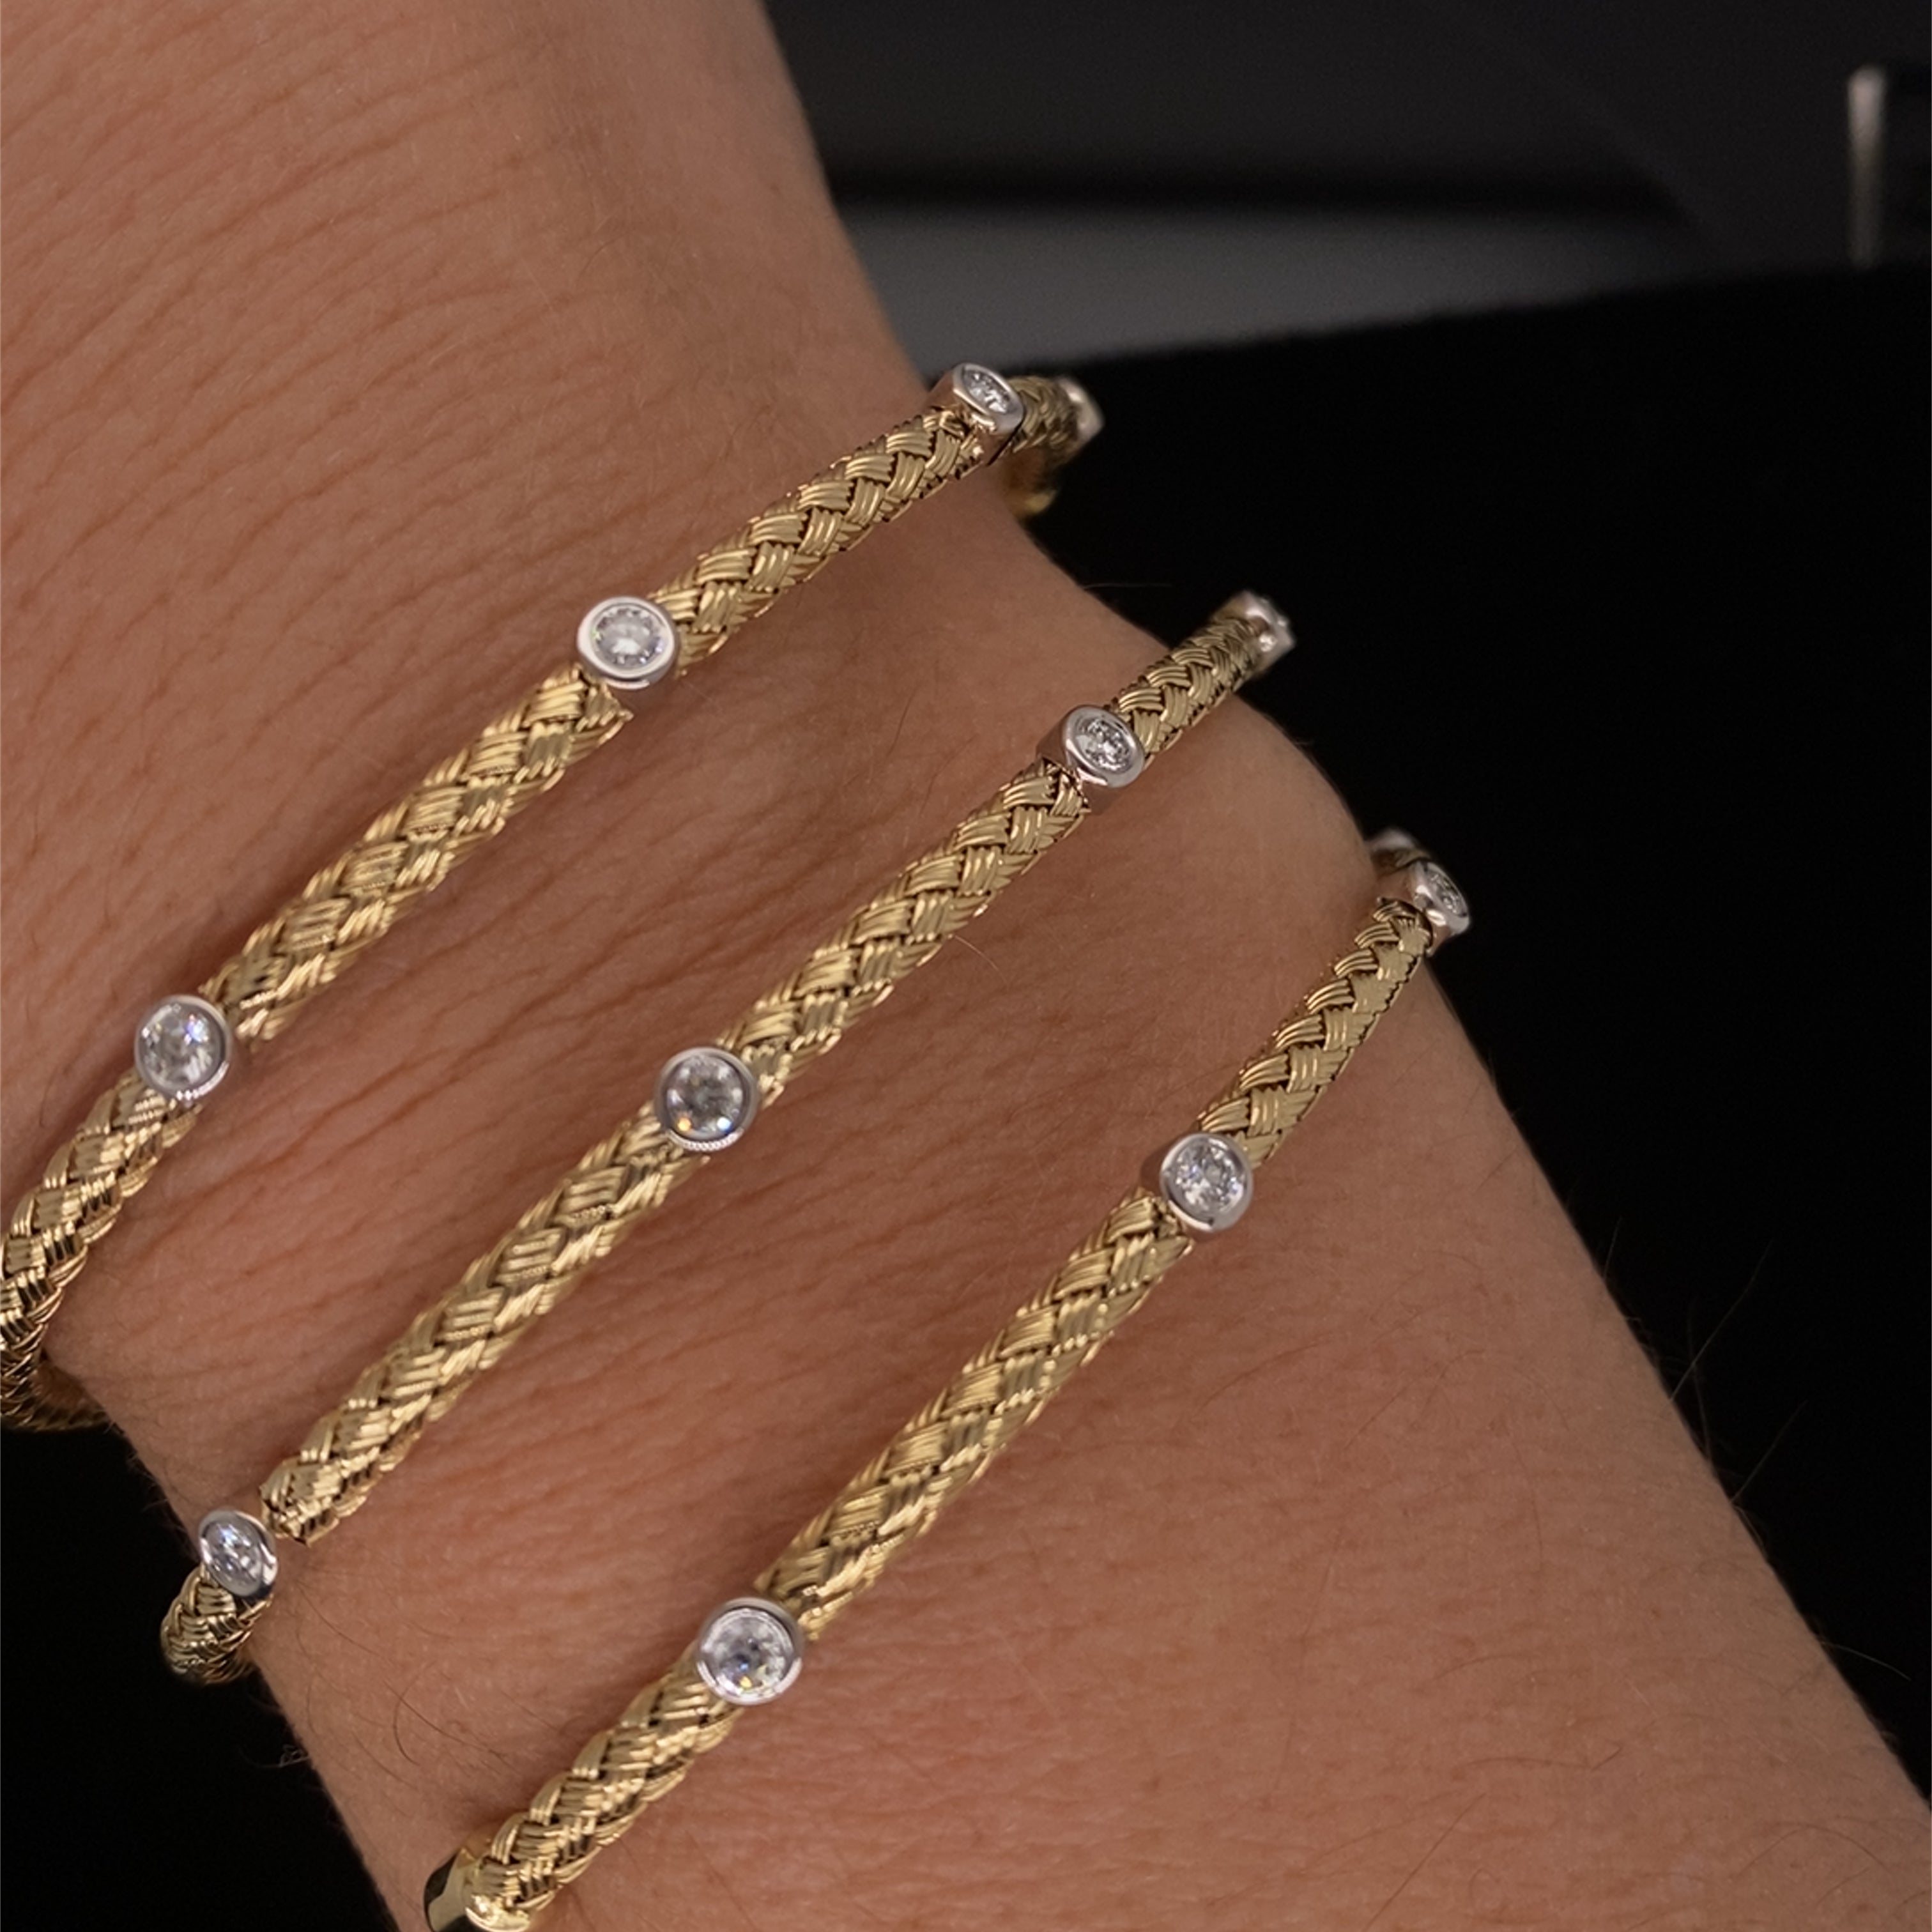 Diamond Curb Chain Bangle Bracelet - Nuha Jewelers